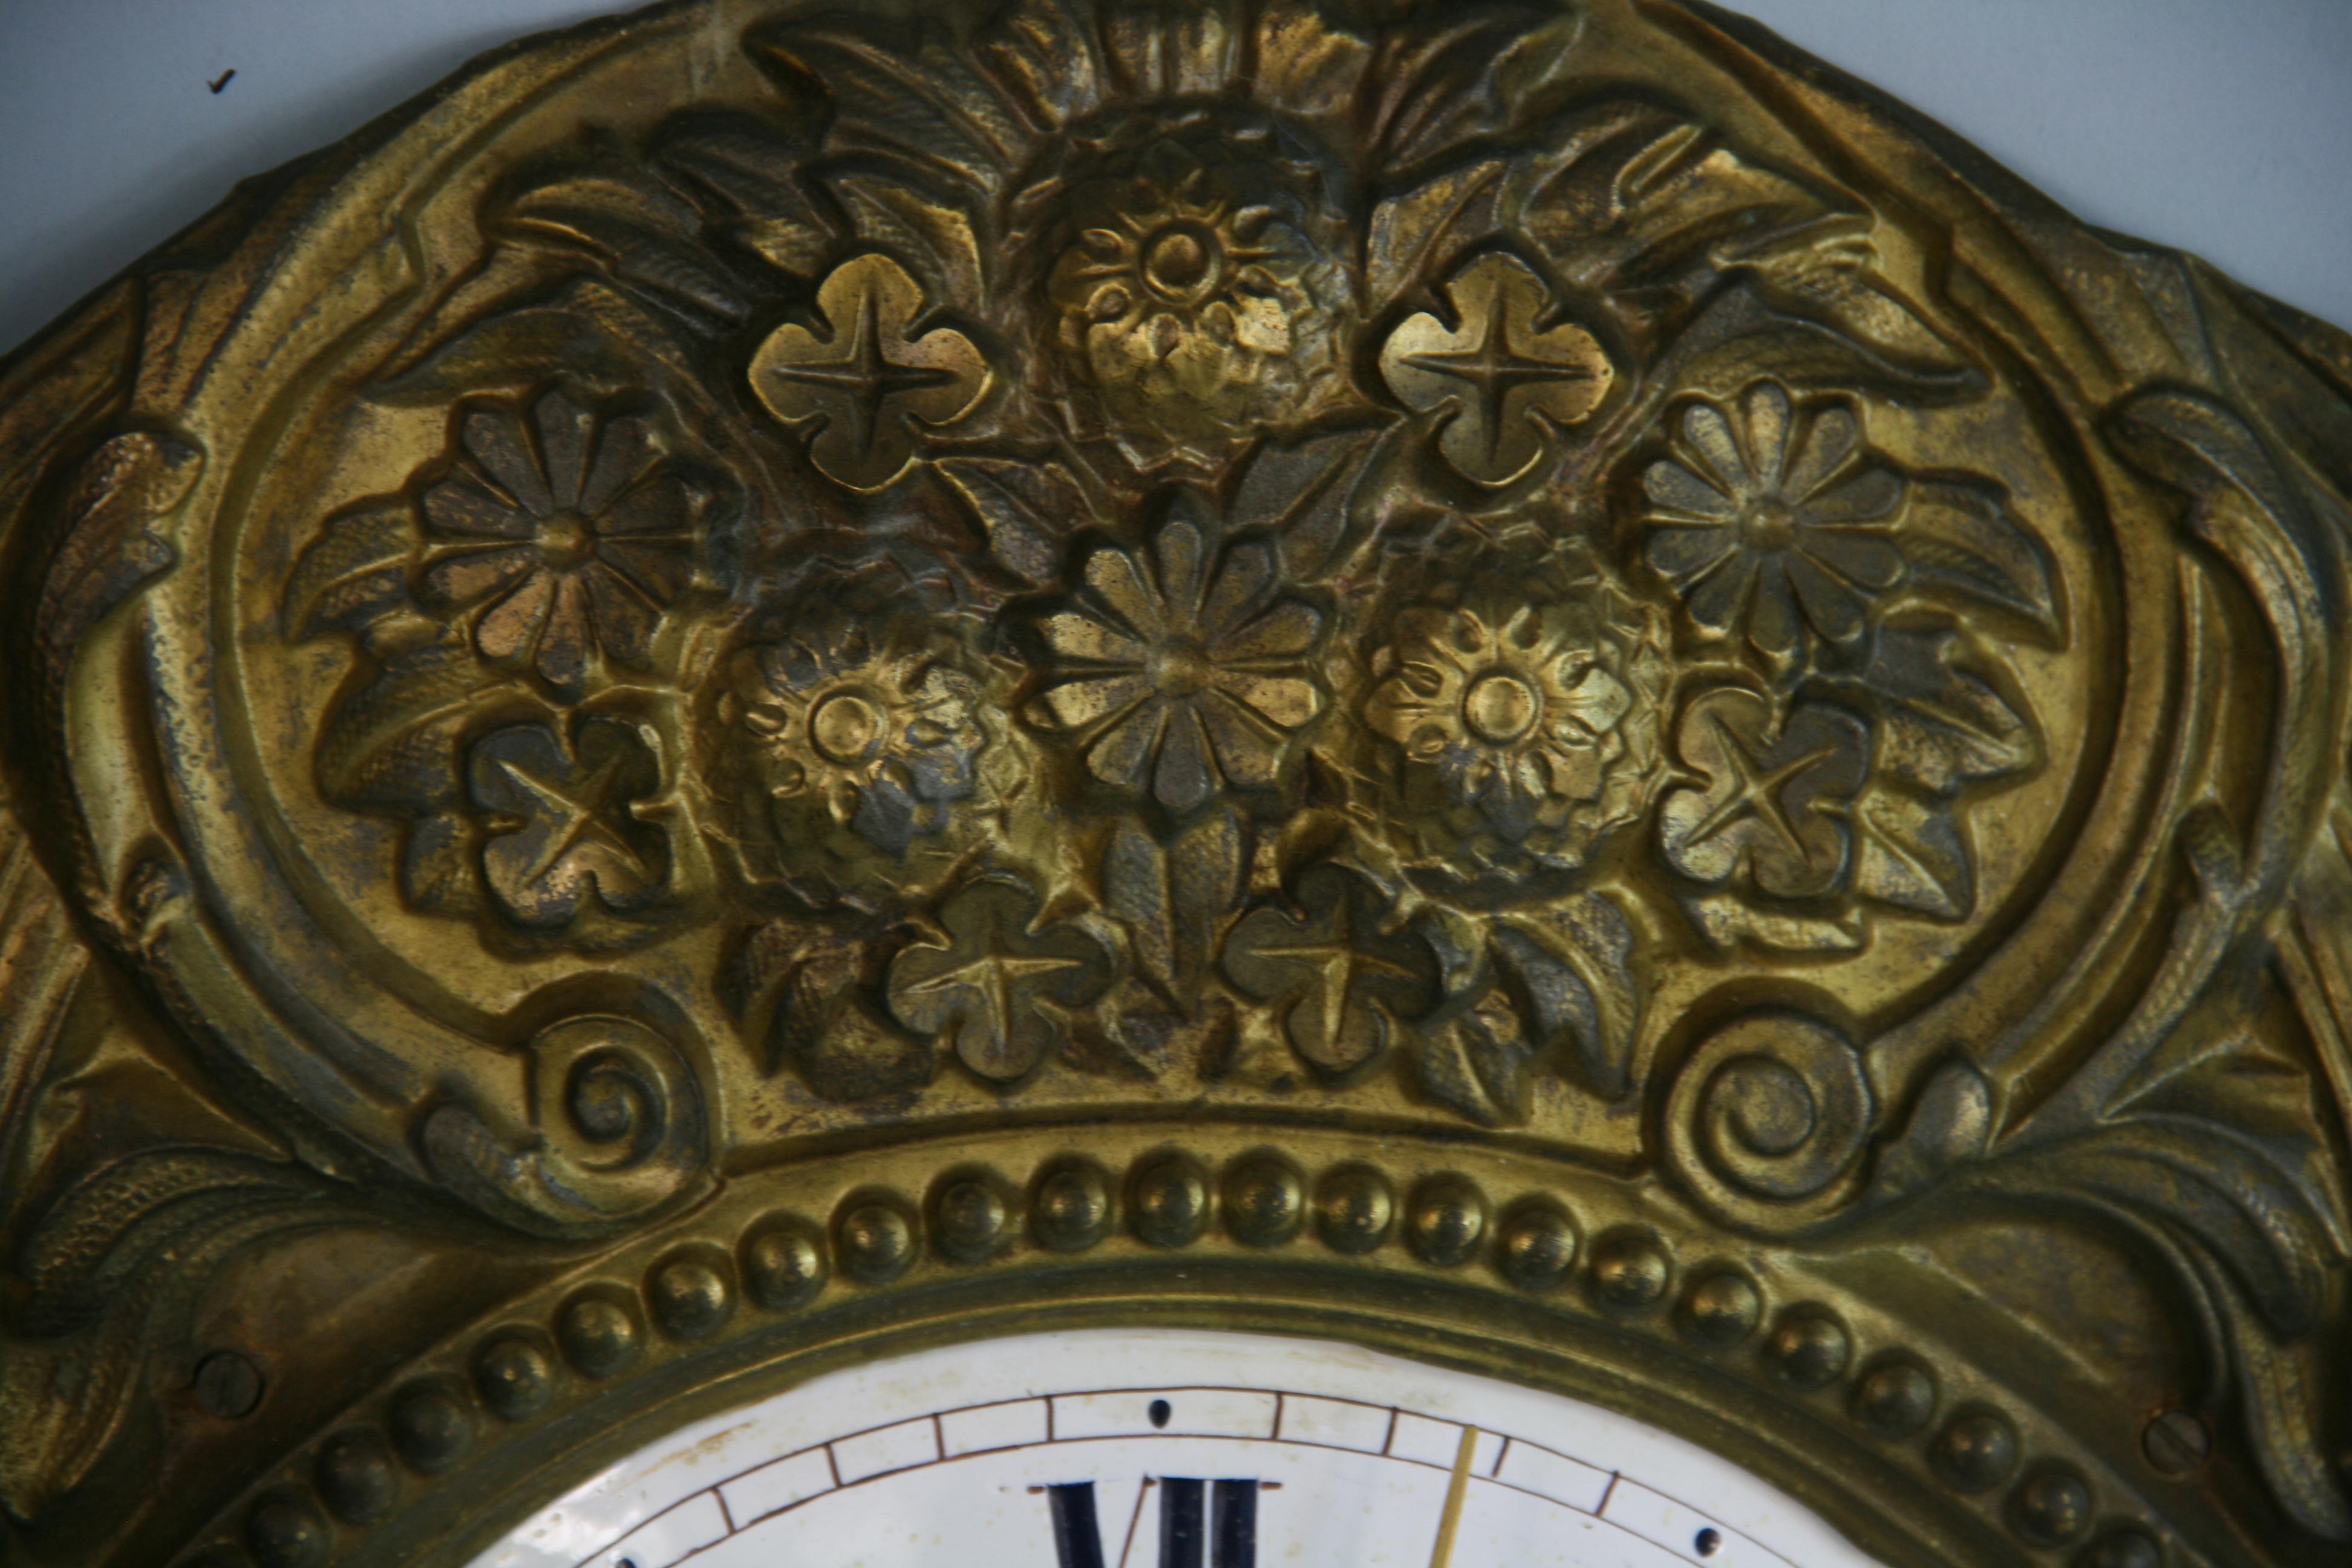 kirch wall clock